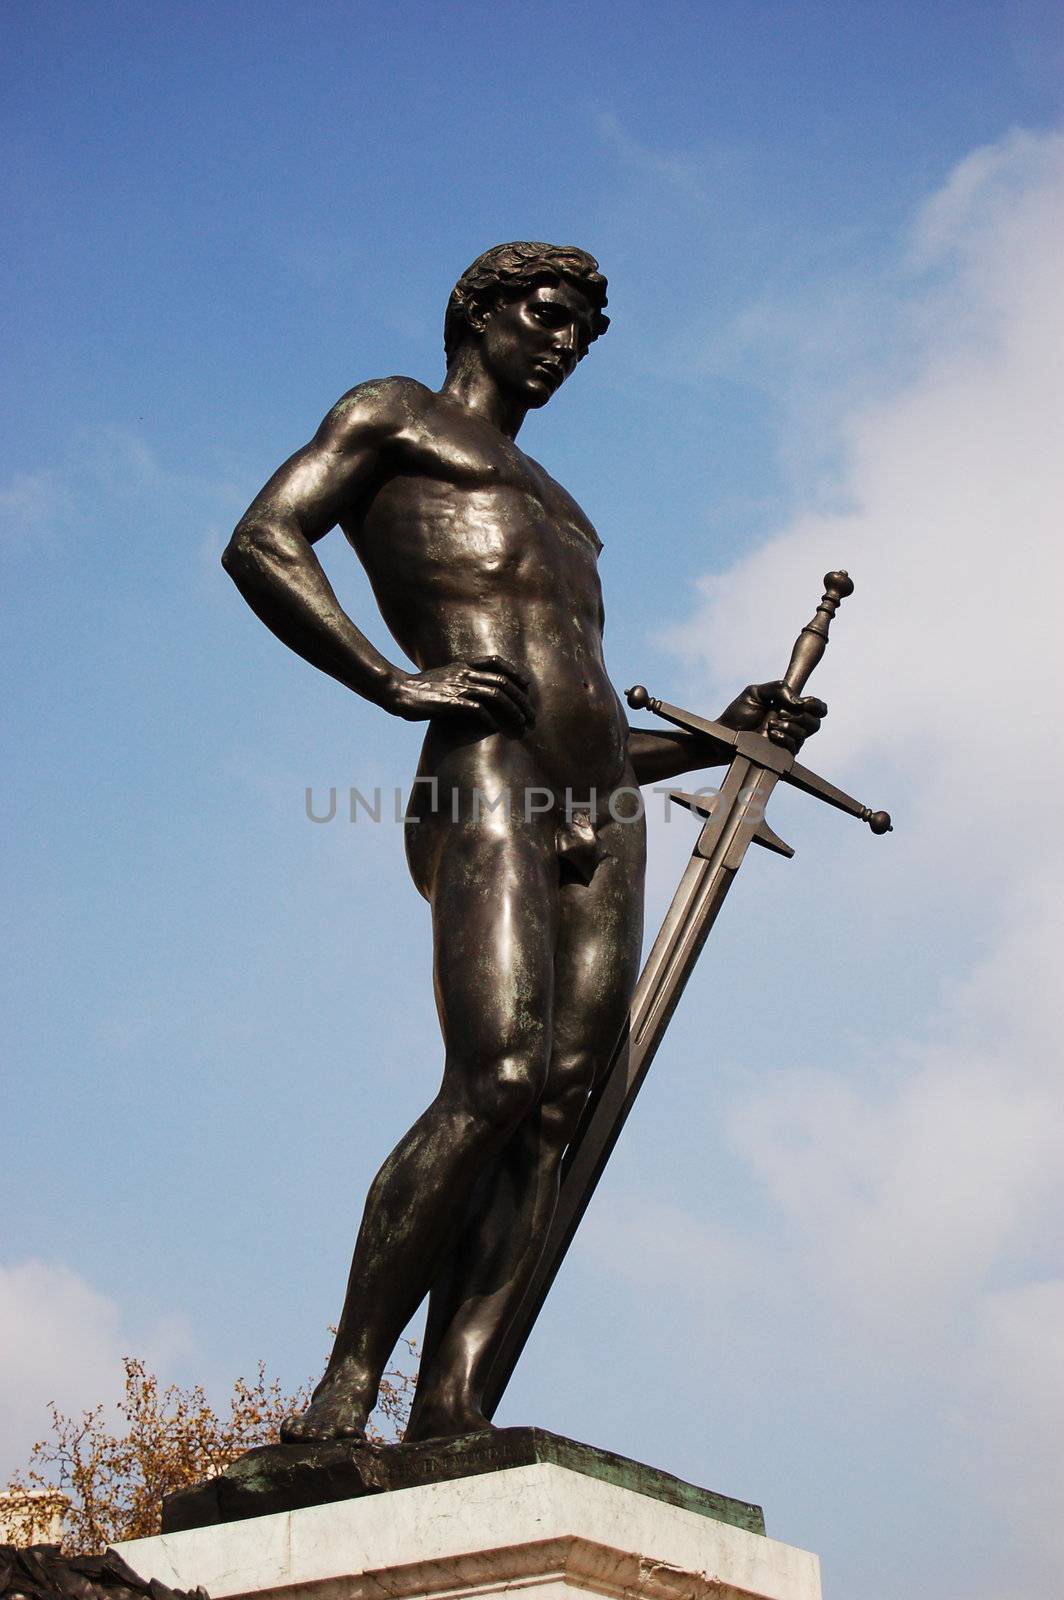 Statue in London, United Kingdom.